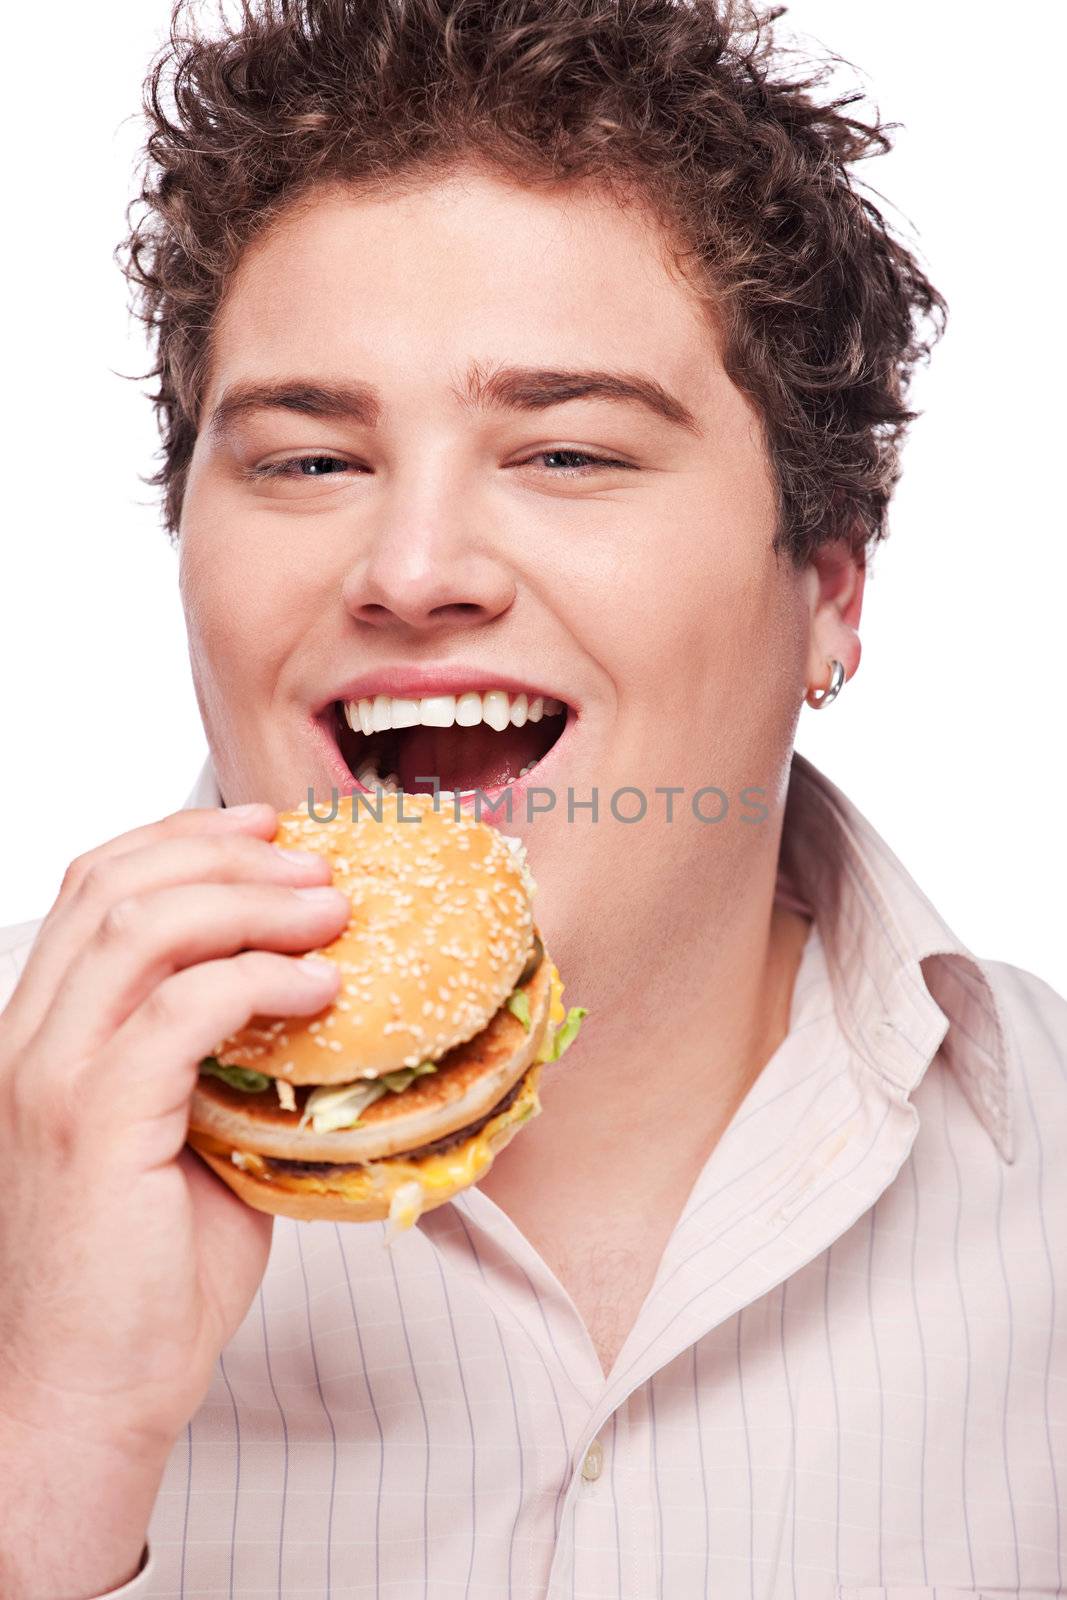 Cute chubby eating a hamburger